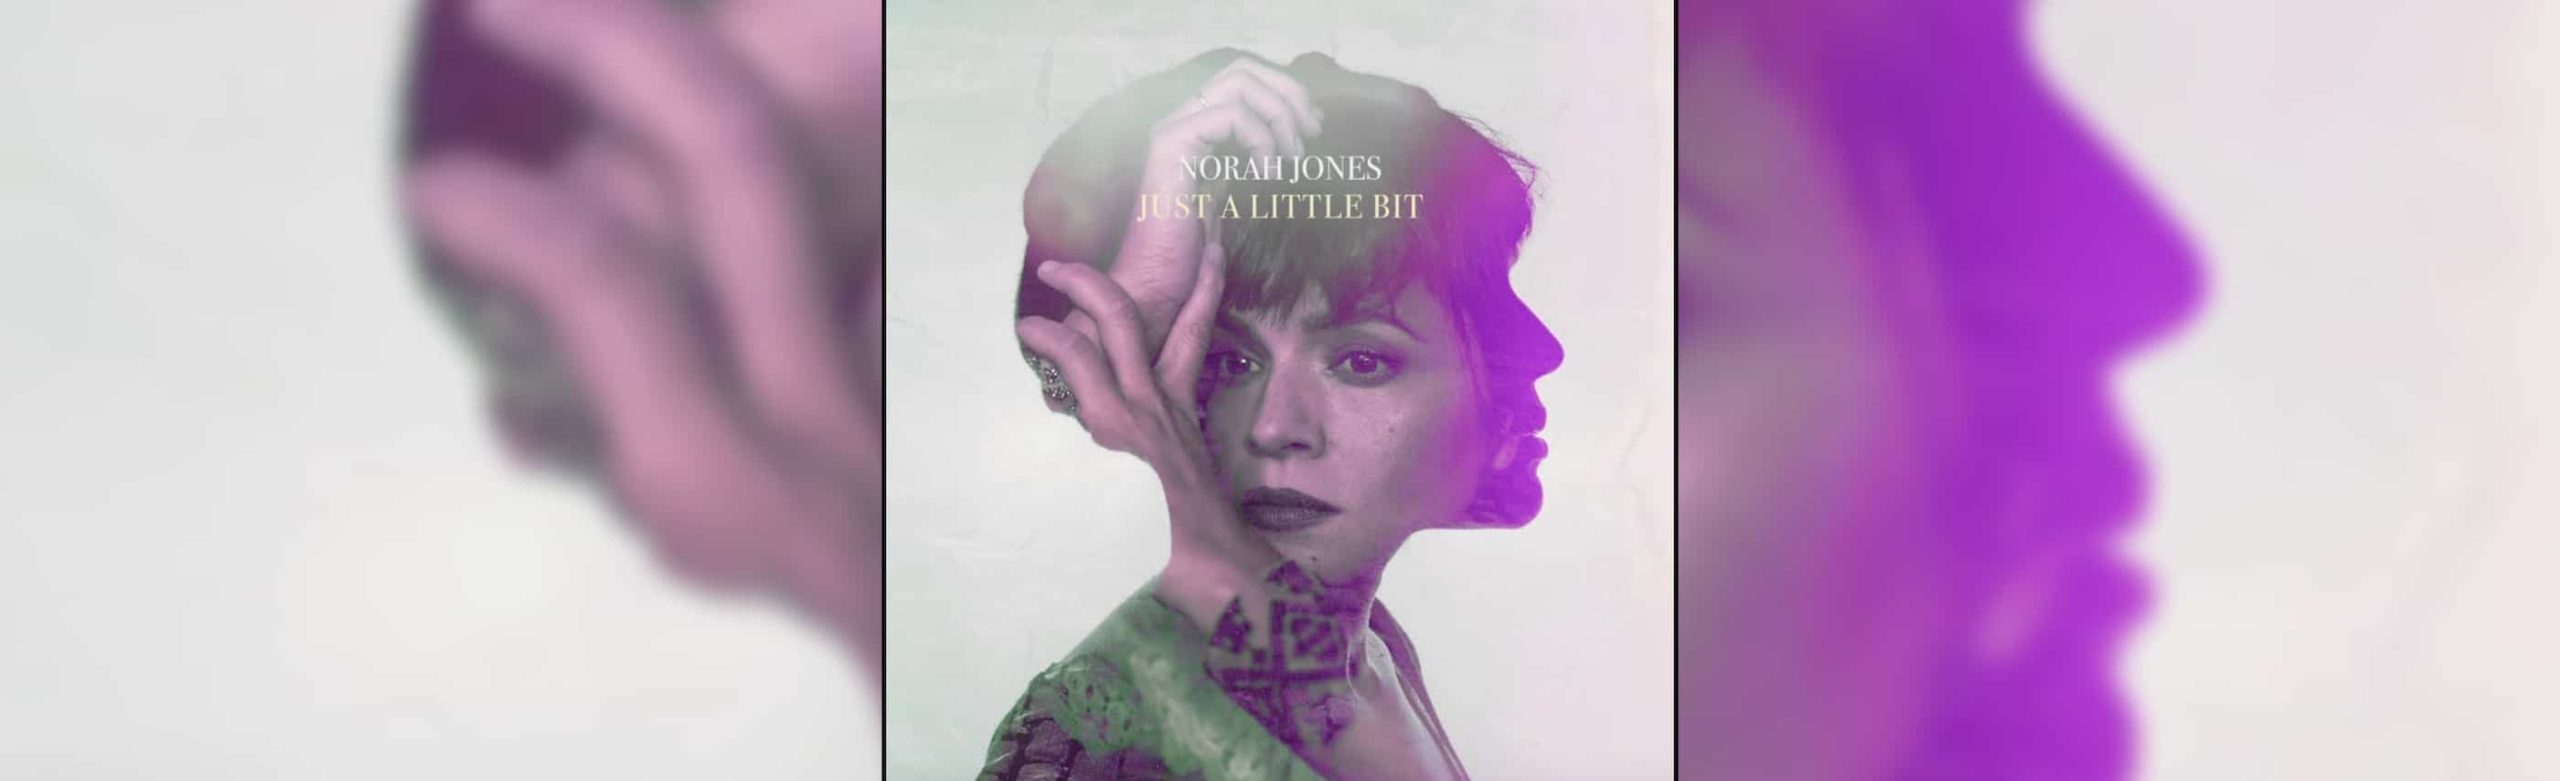 Norah Jones Releases New Single “Just a Little Bit” and Announces New Album ‘Begin Again’ Image